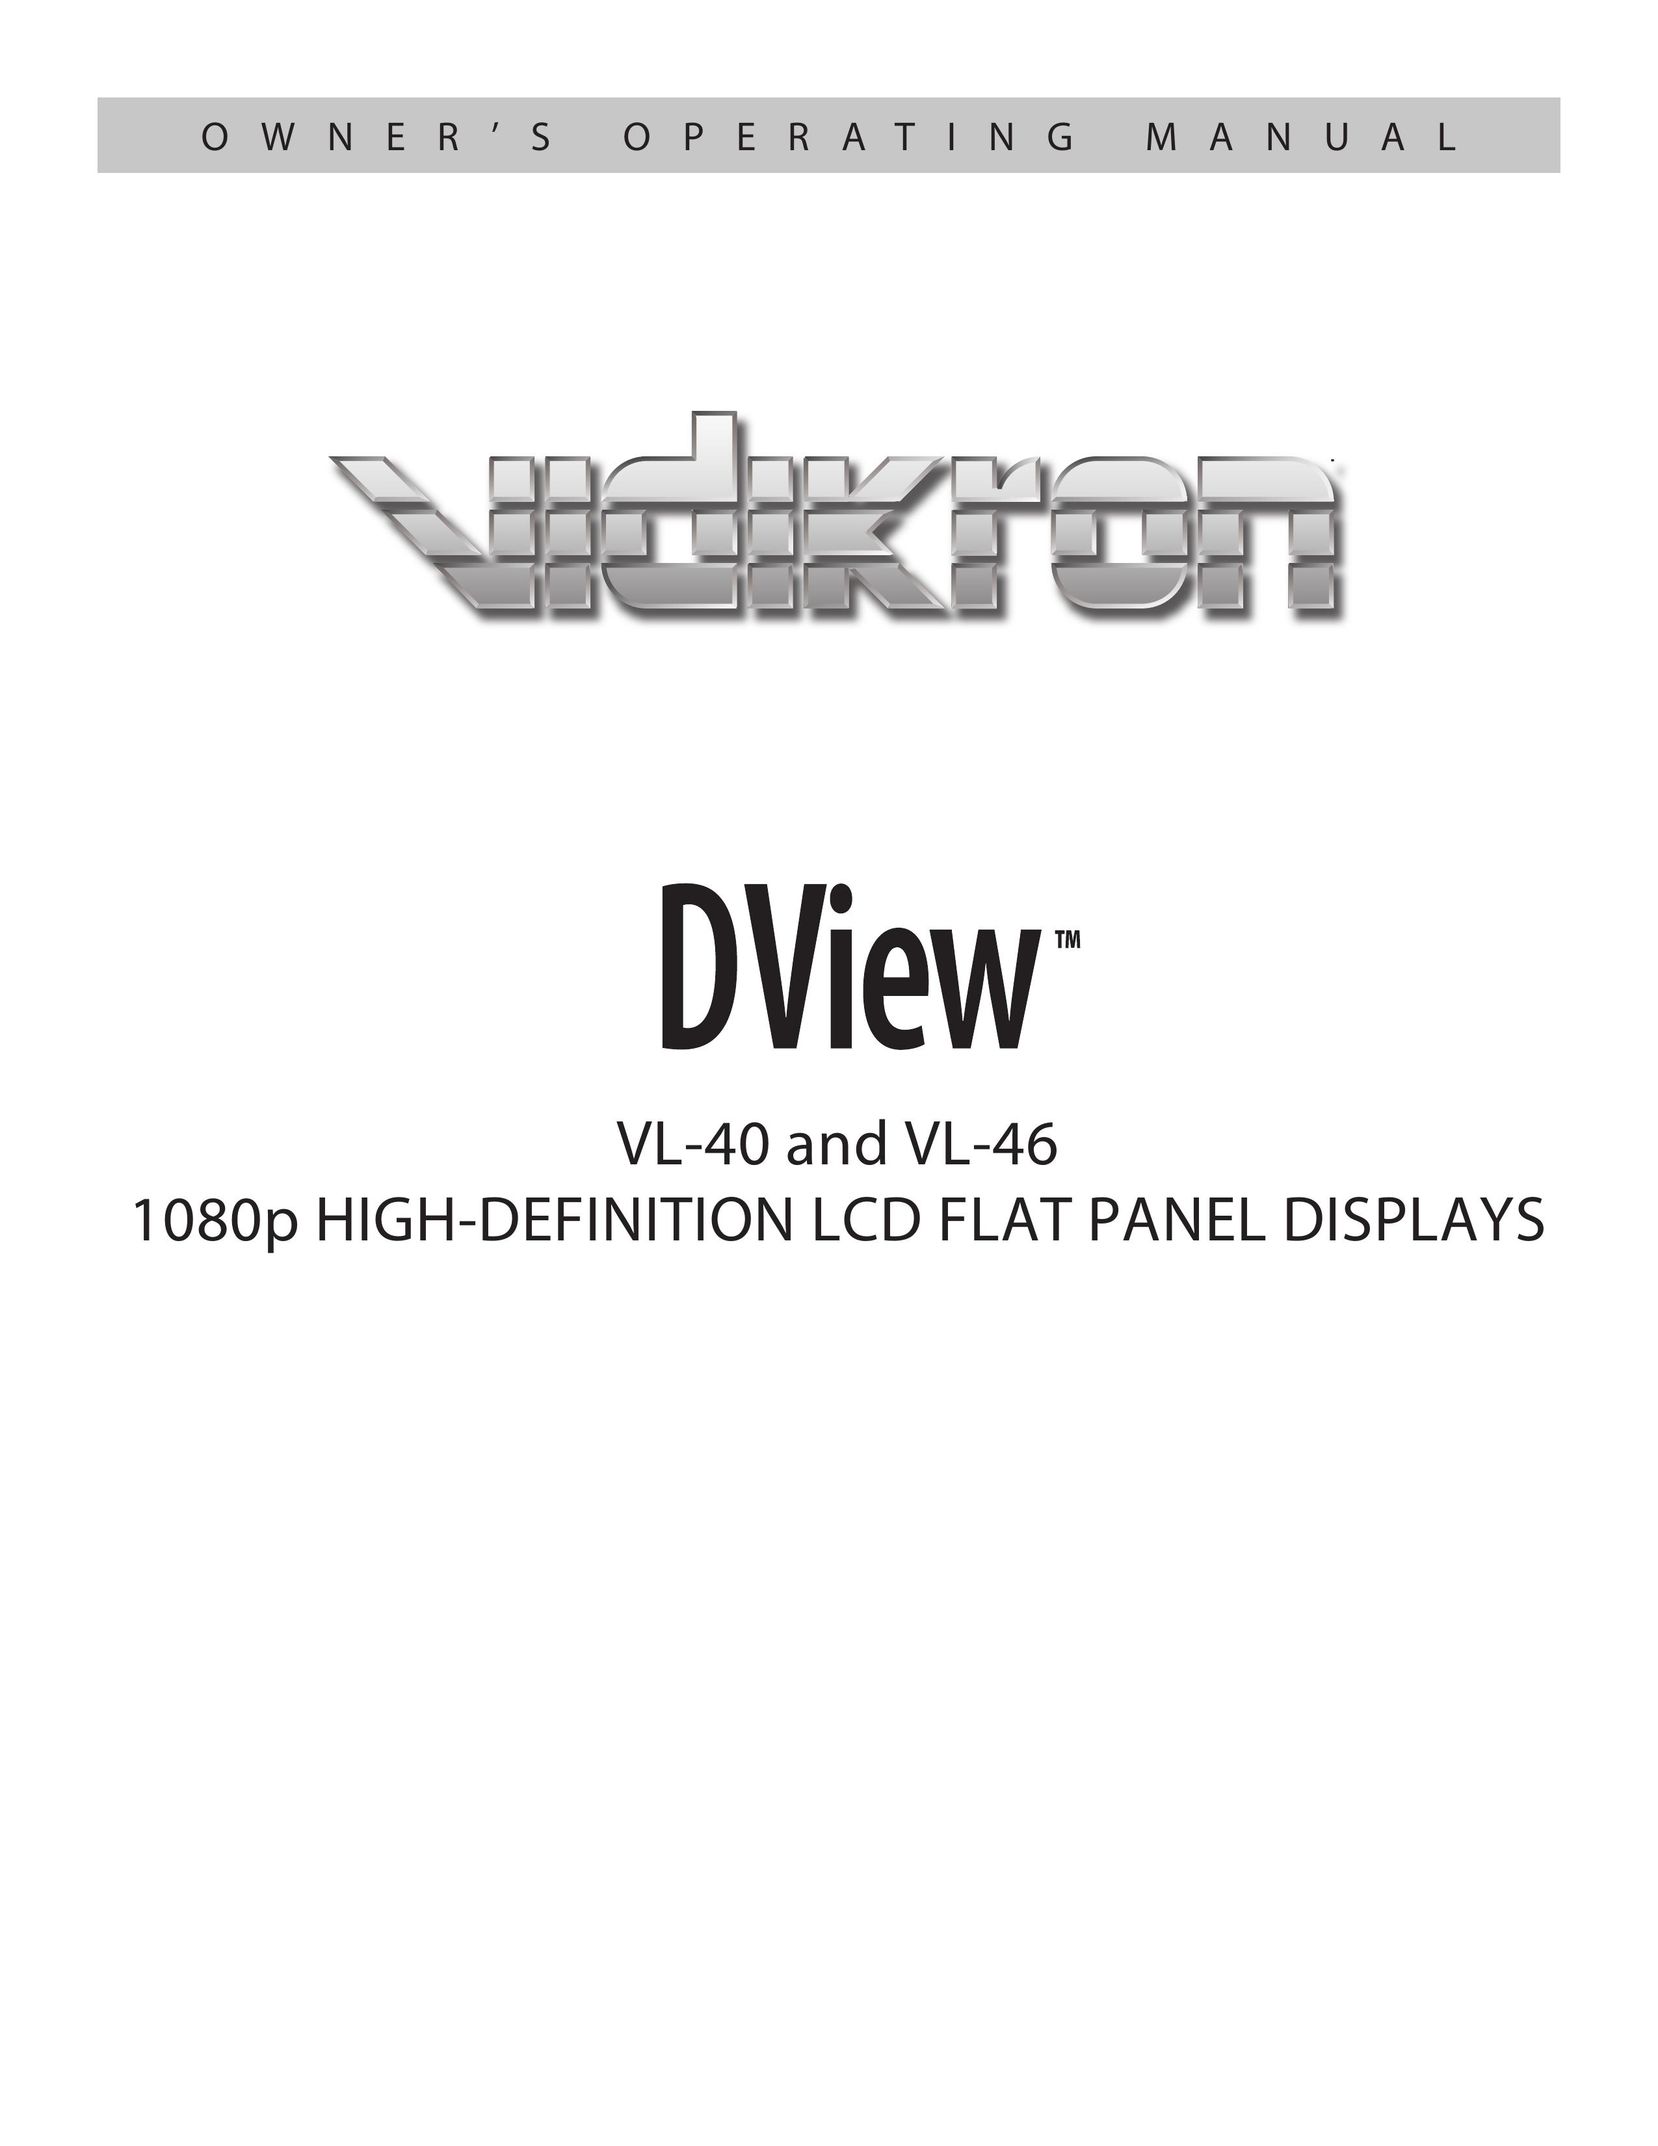 Runco VL-46 Flat Panel Television User Manual